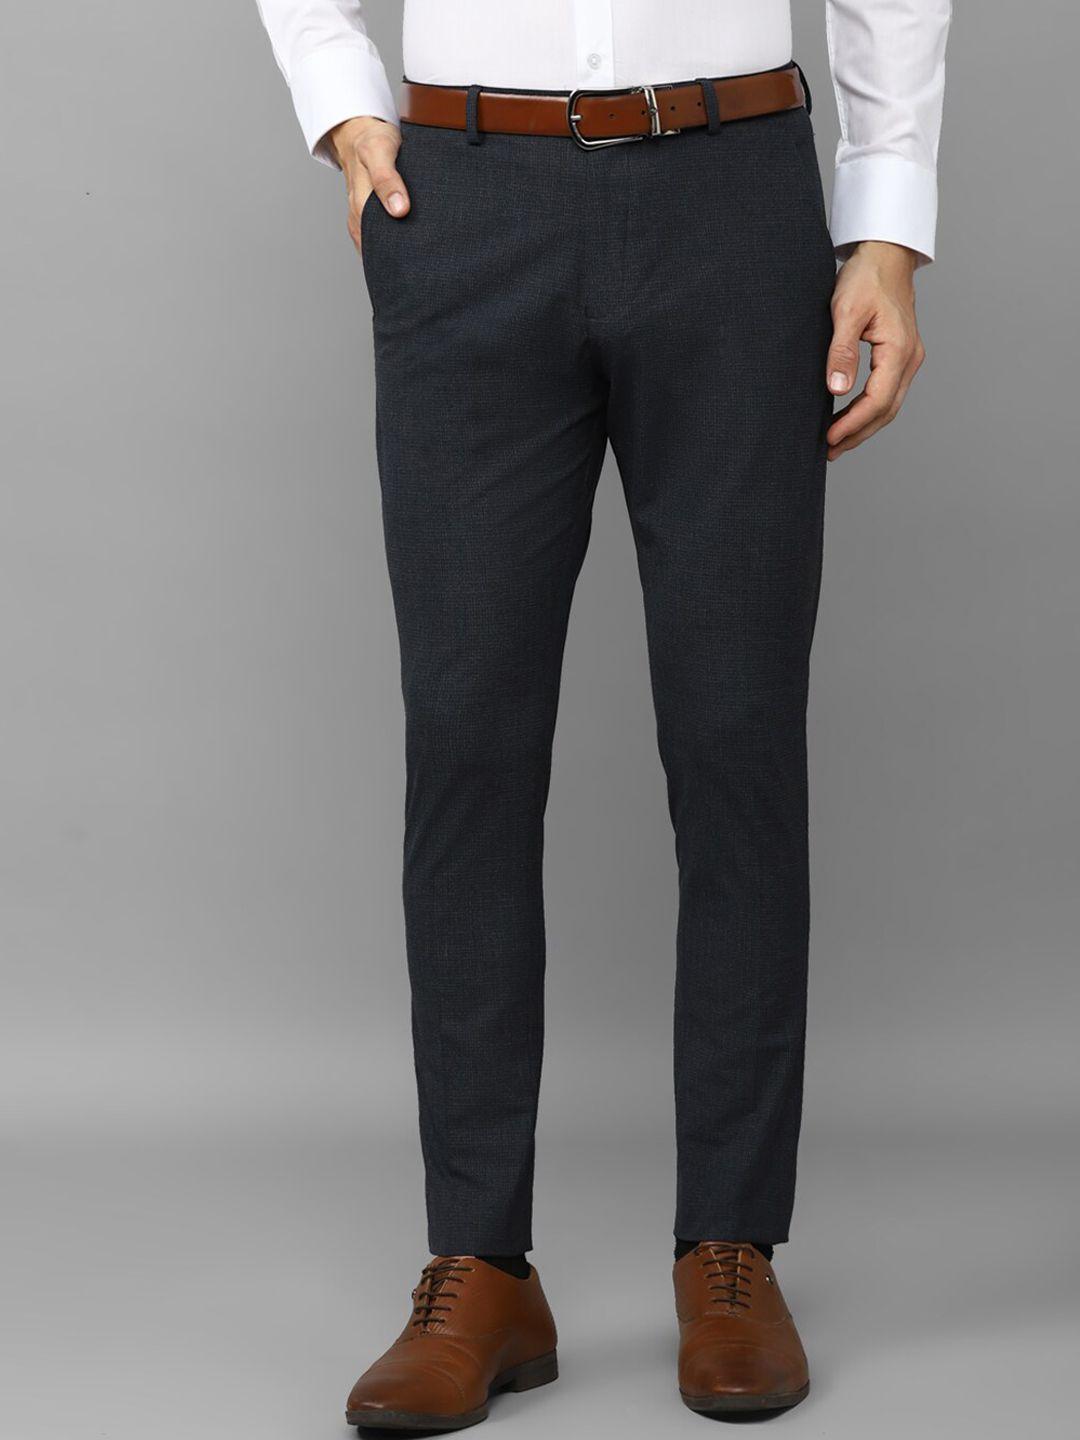 louis-philippe-men-mid-rise-slim-fit-formal-trousers